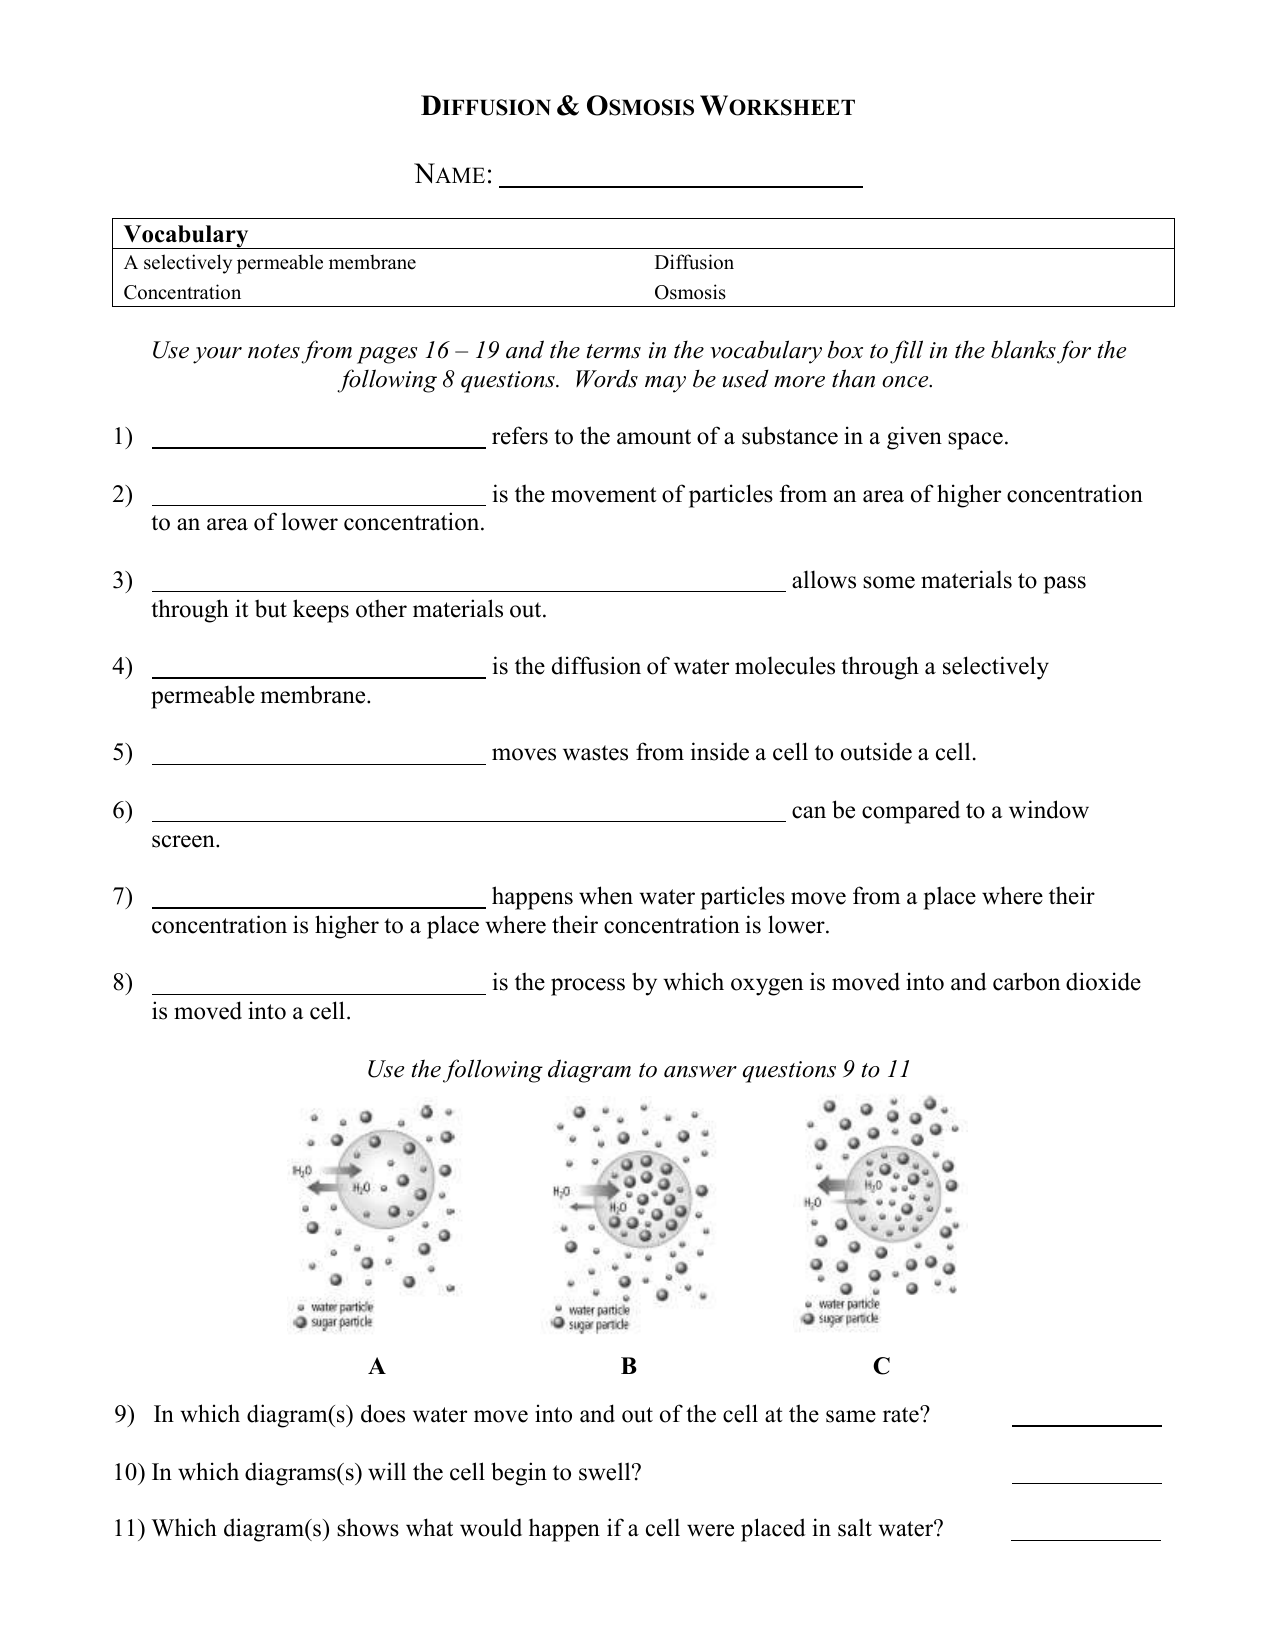 diffusion-and-osmosis-worksheet-page-3-gohomemade